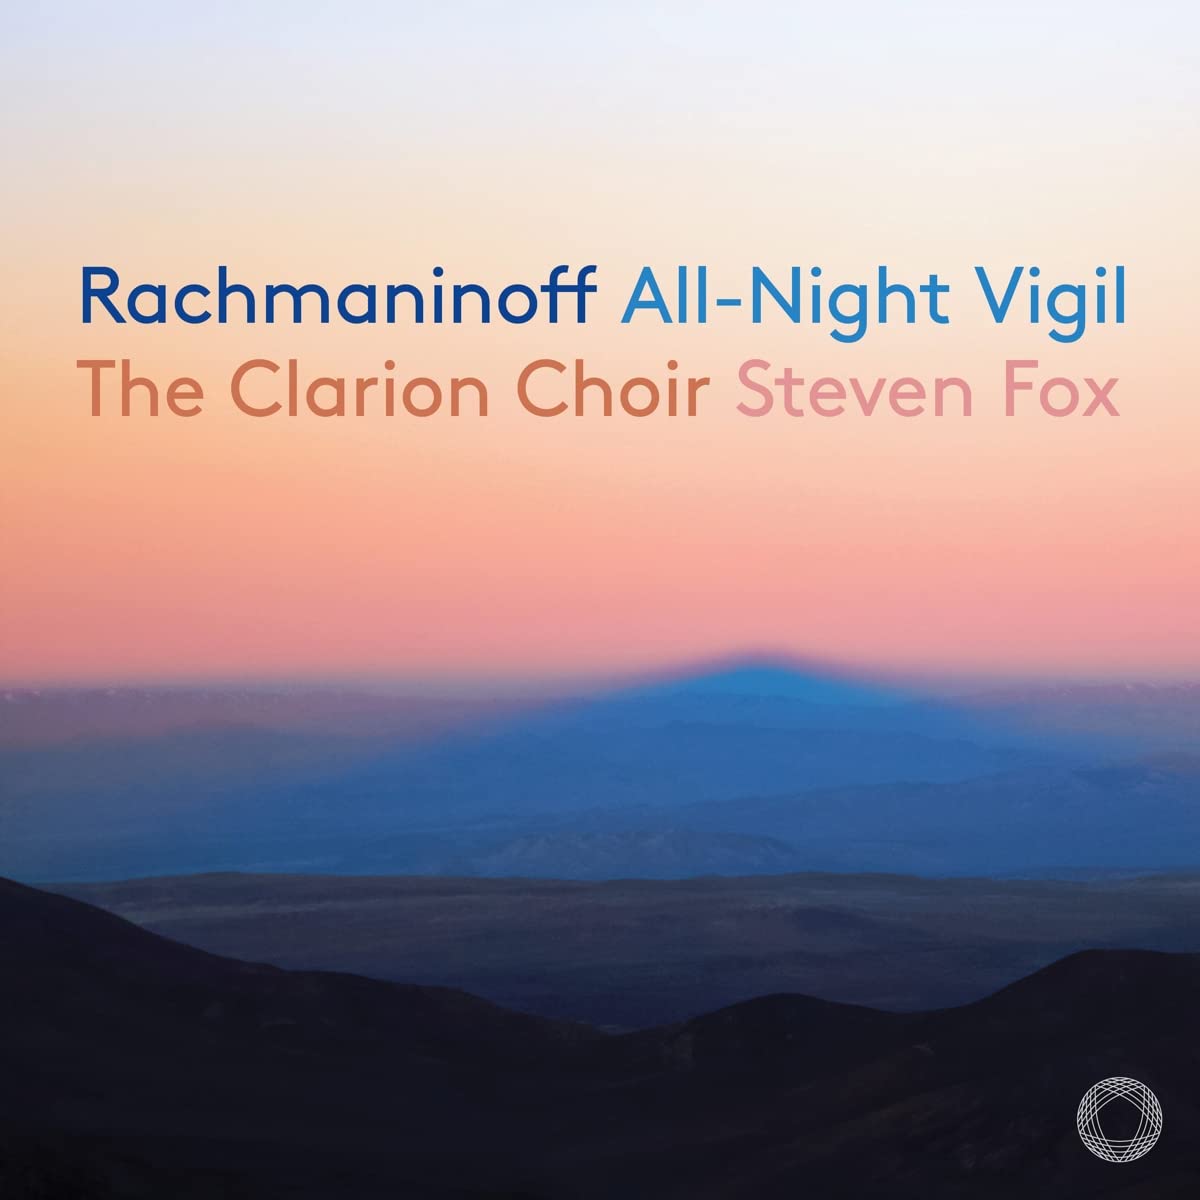 The Clarion Choir | All-Night Vigil